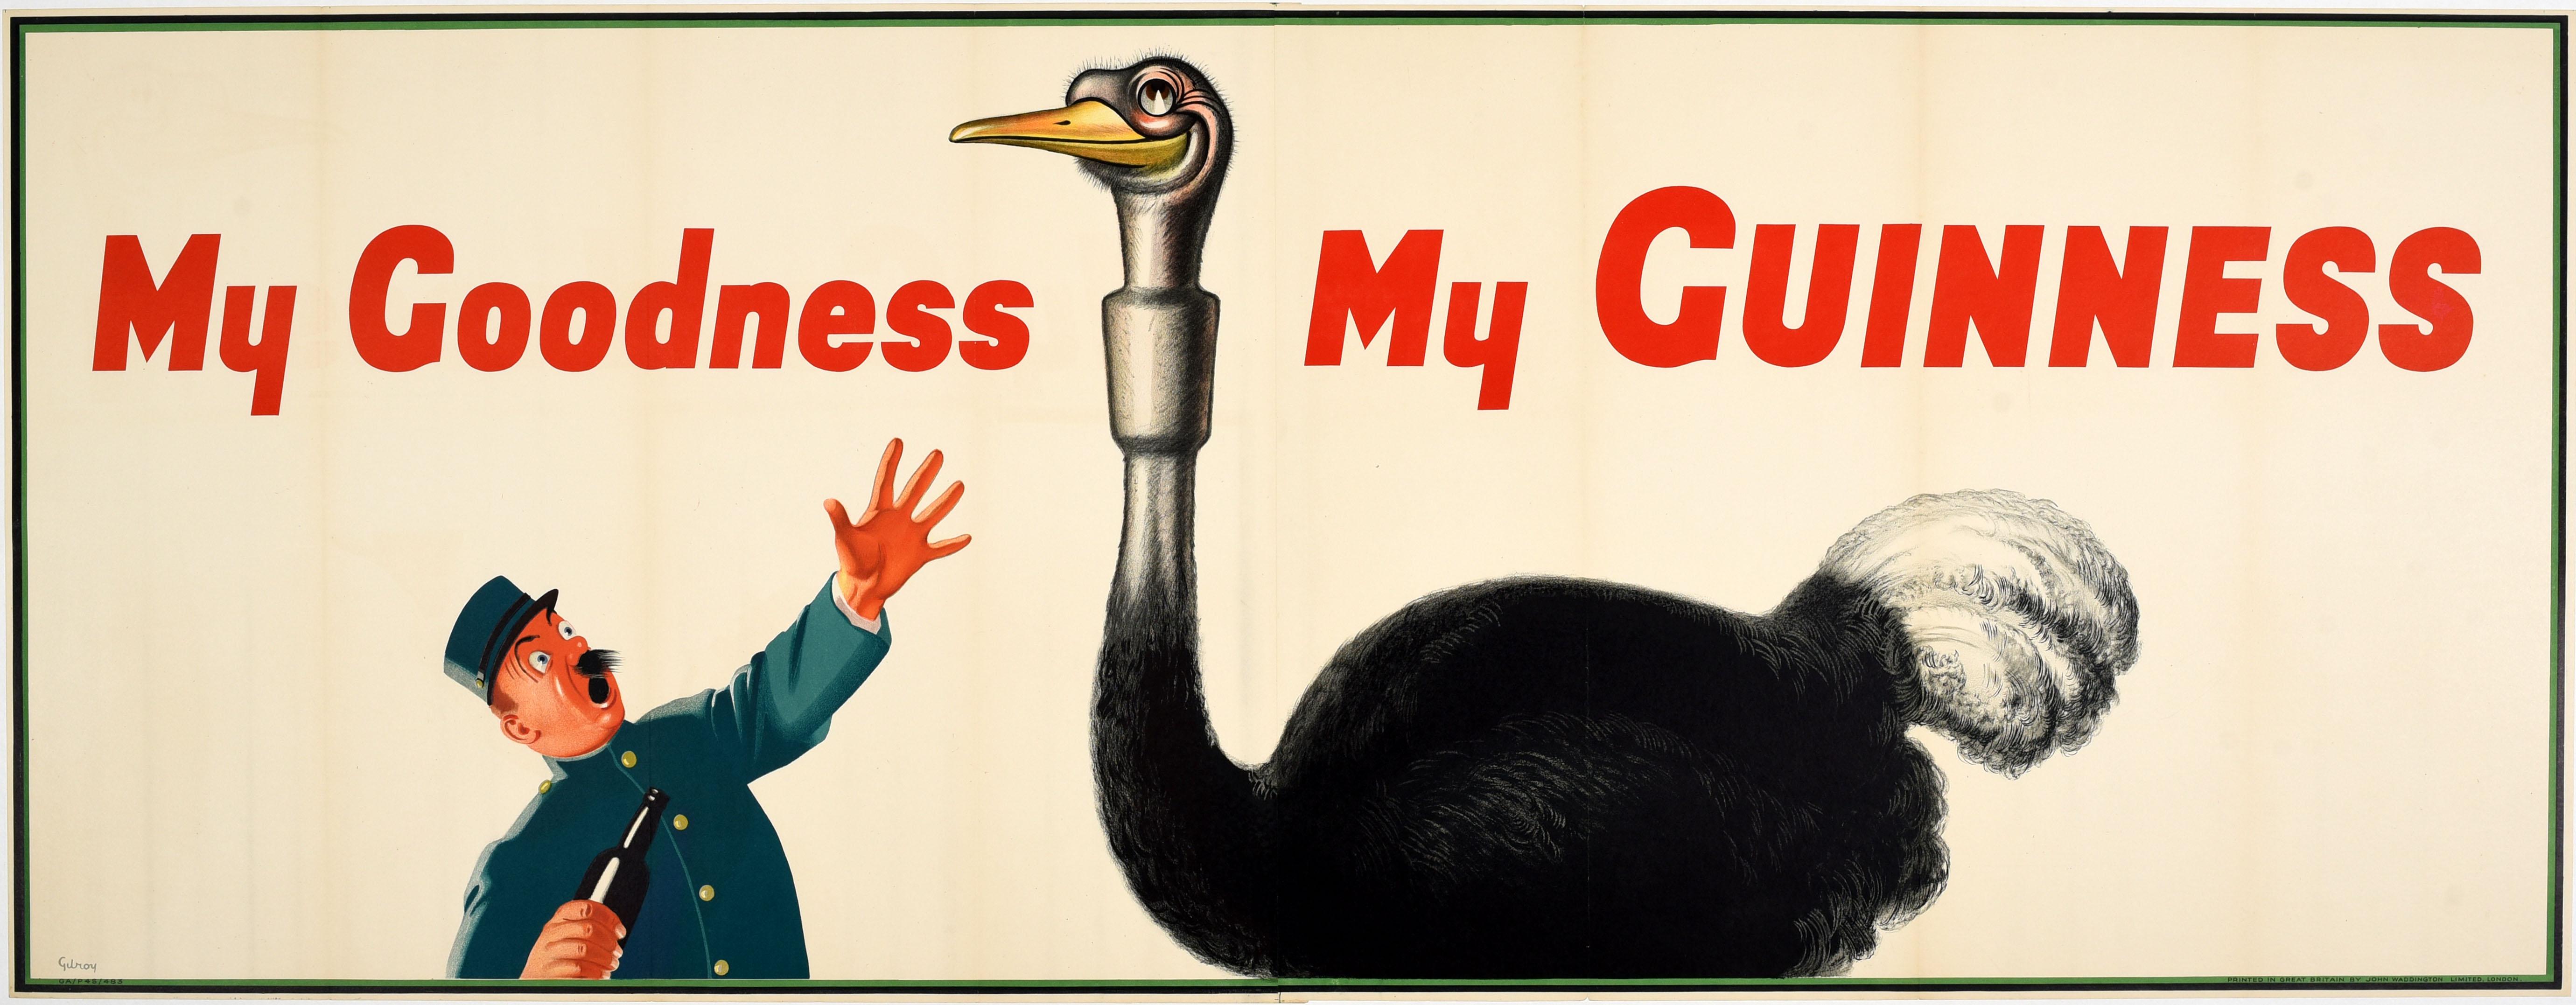 John Gilroy Print - Original Vintage Drink Advertising Poster My Goodness My Guinness Ostrich Design